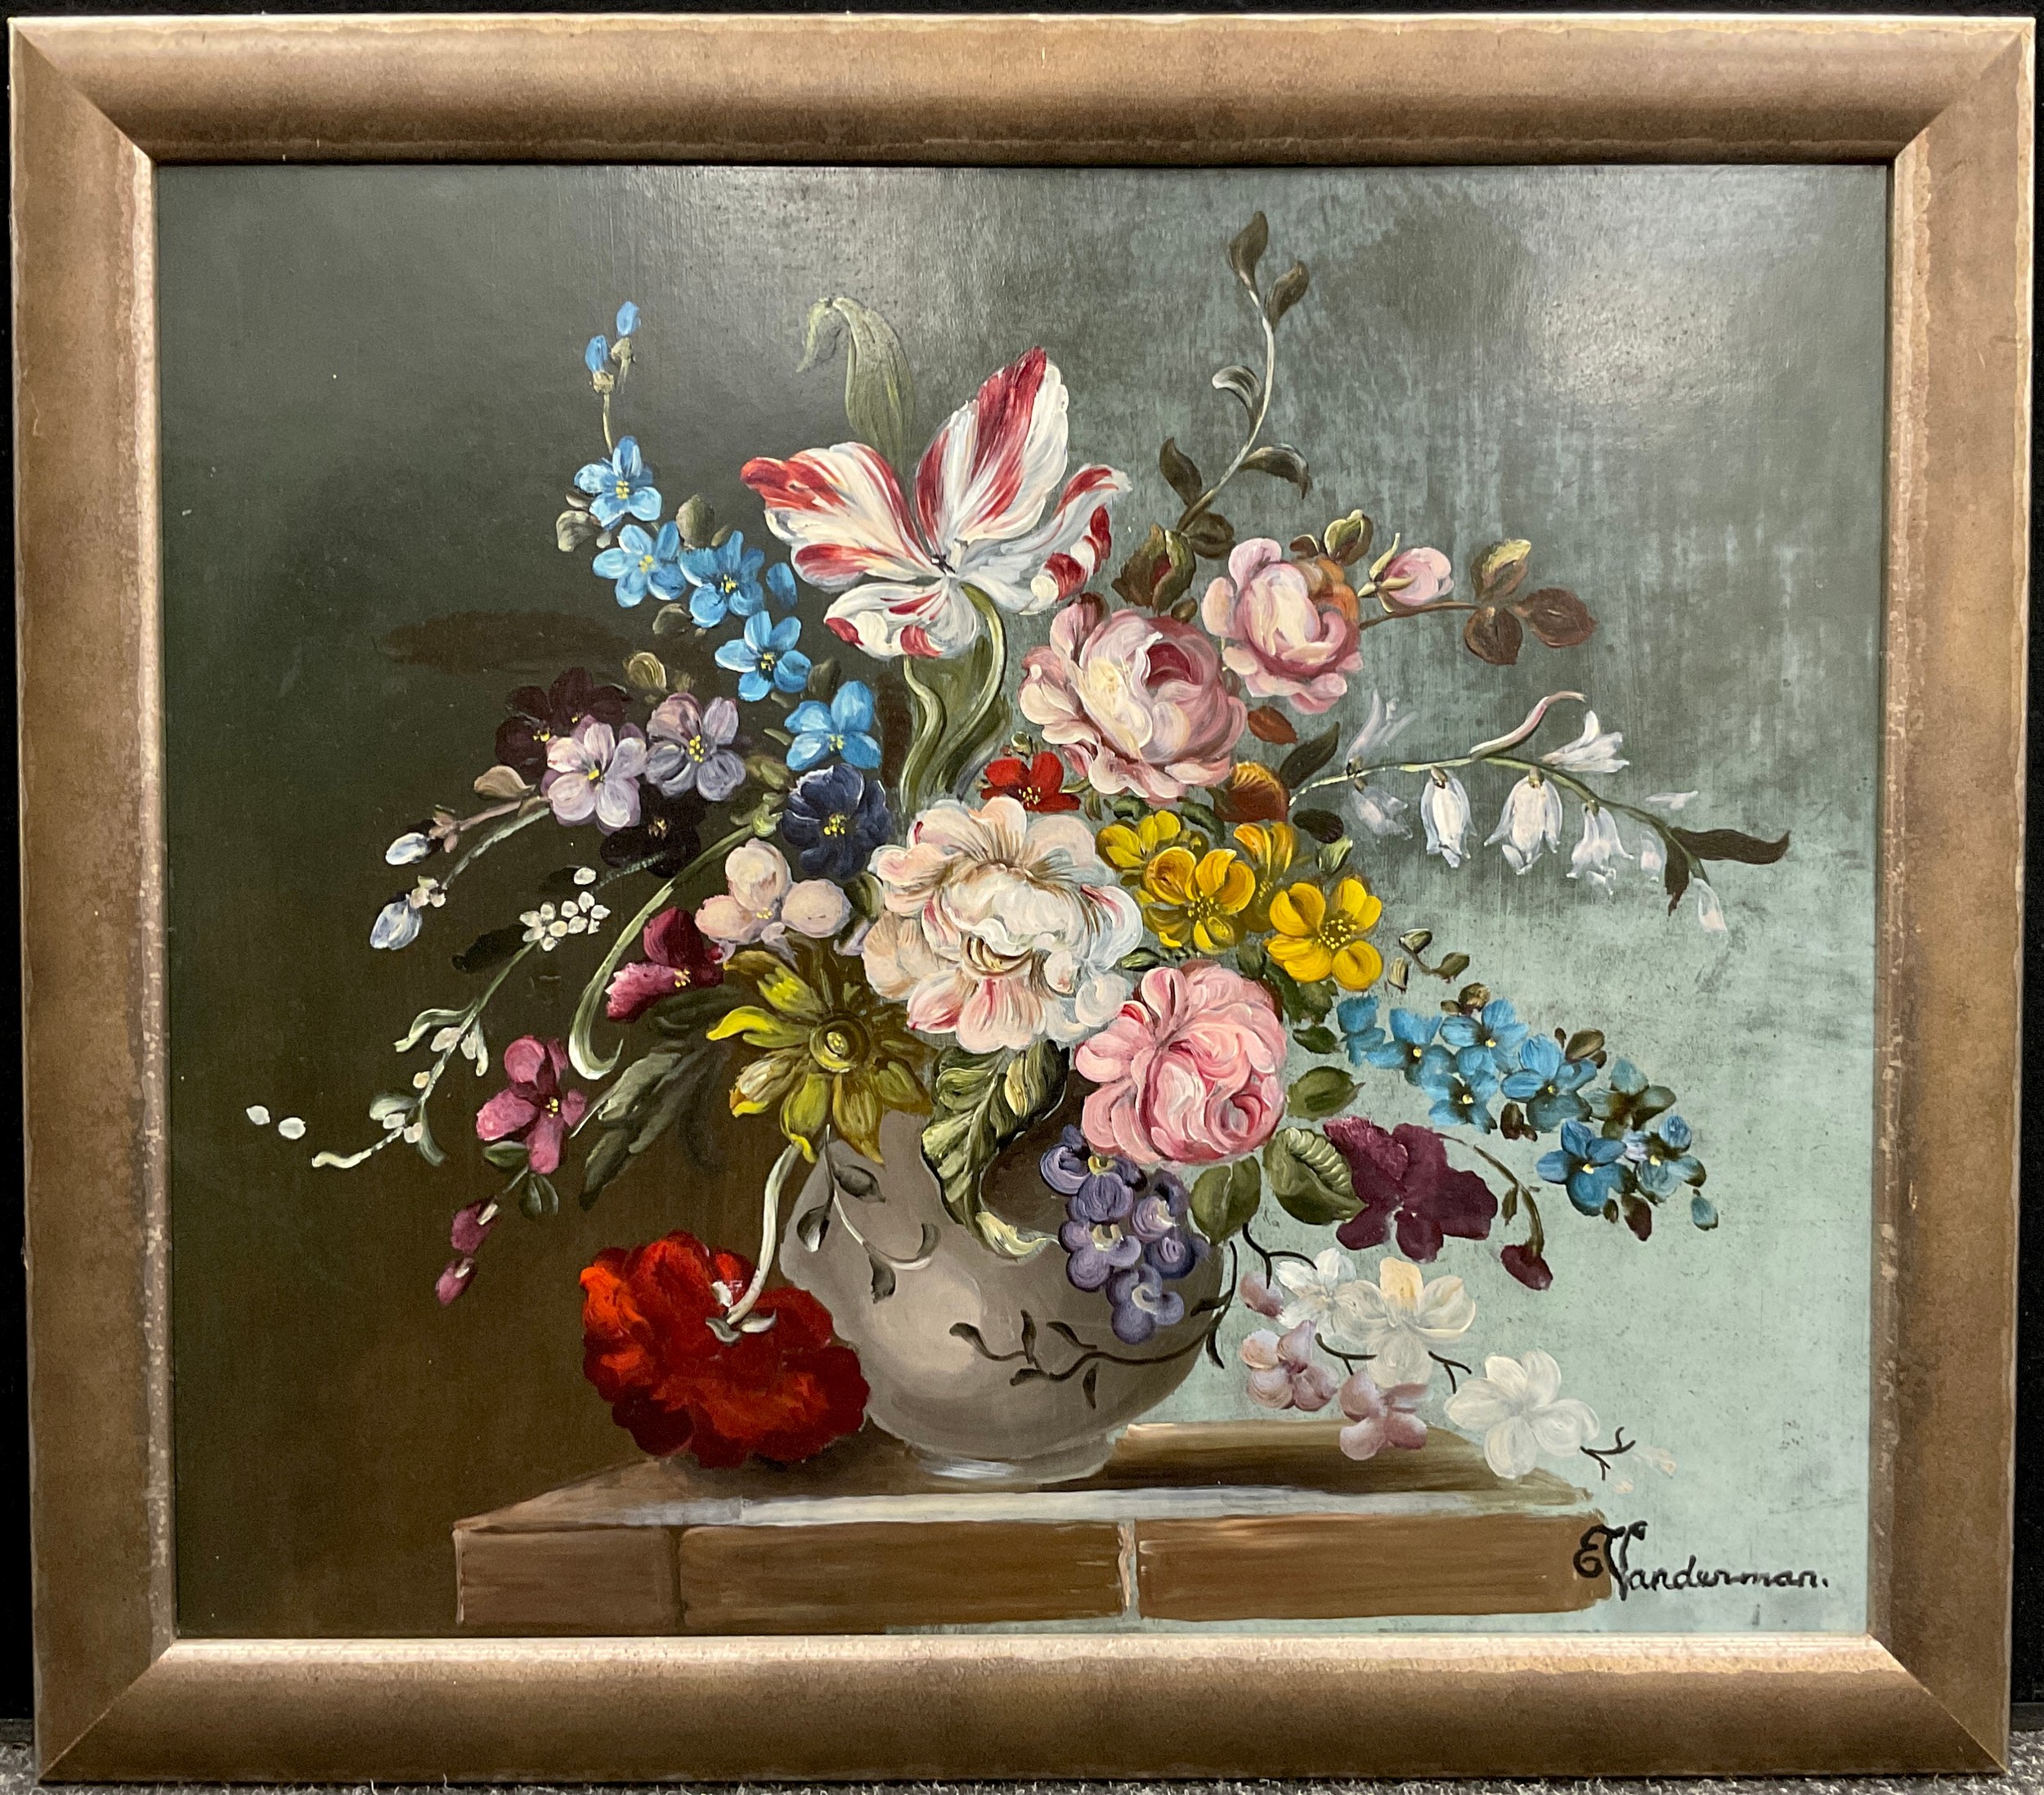 E. Vanderman, A Vase of Summer flowers, signed, oil on board, 46cm x 53cm.